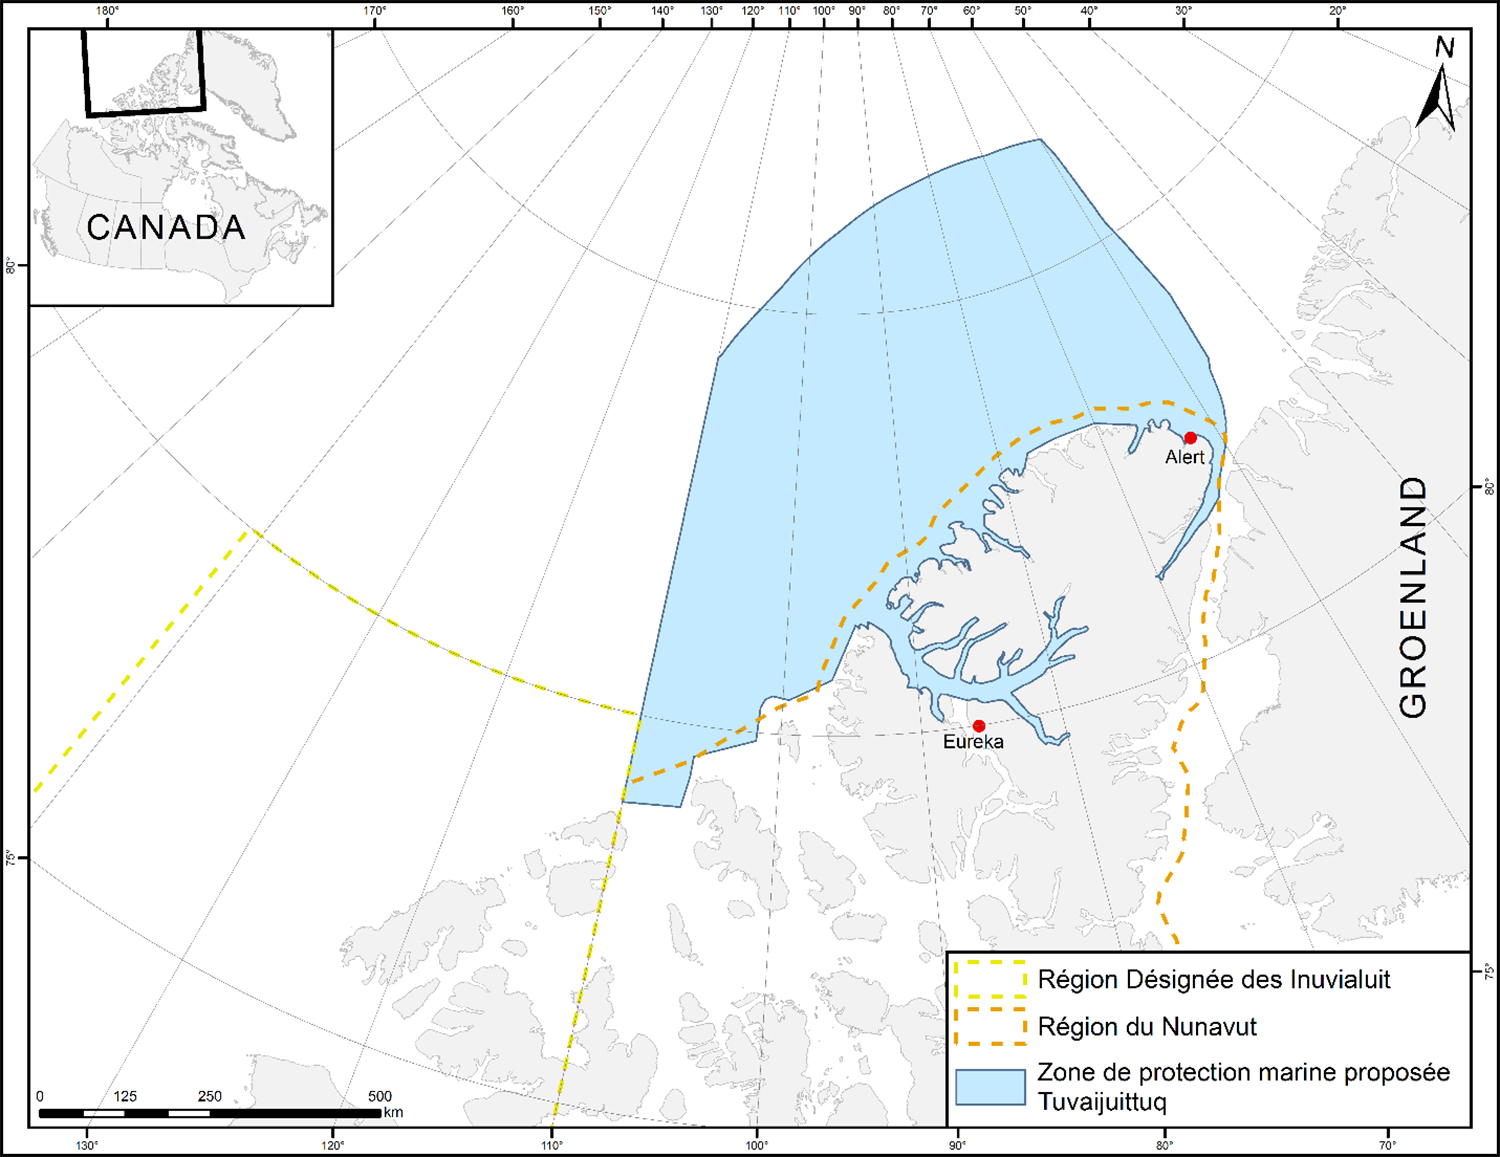 Figure 1. Carte de la zone de protection marine proposée de Tuvaijuittuq